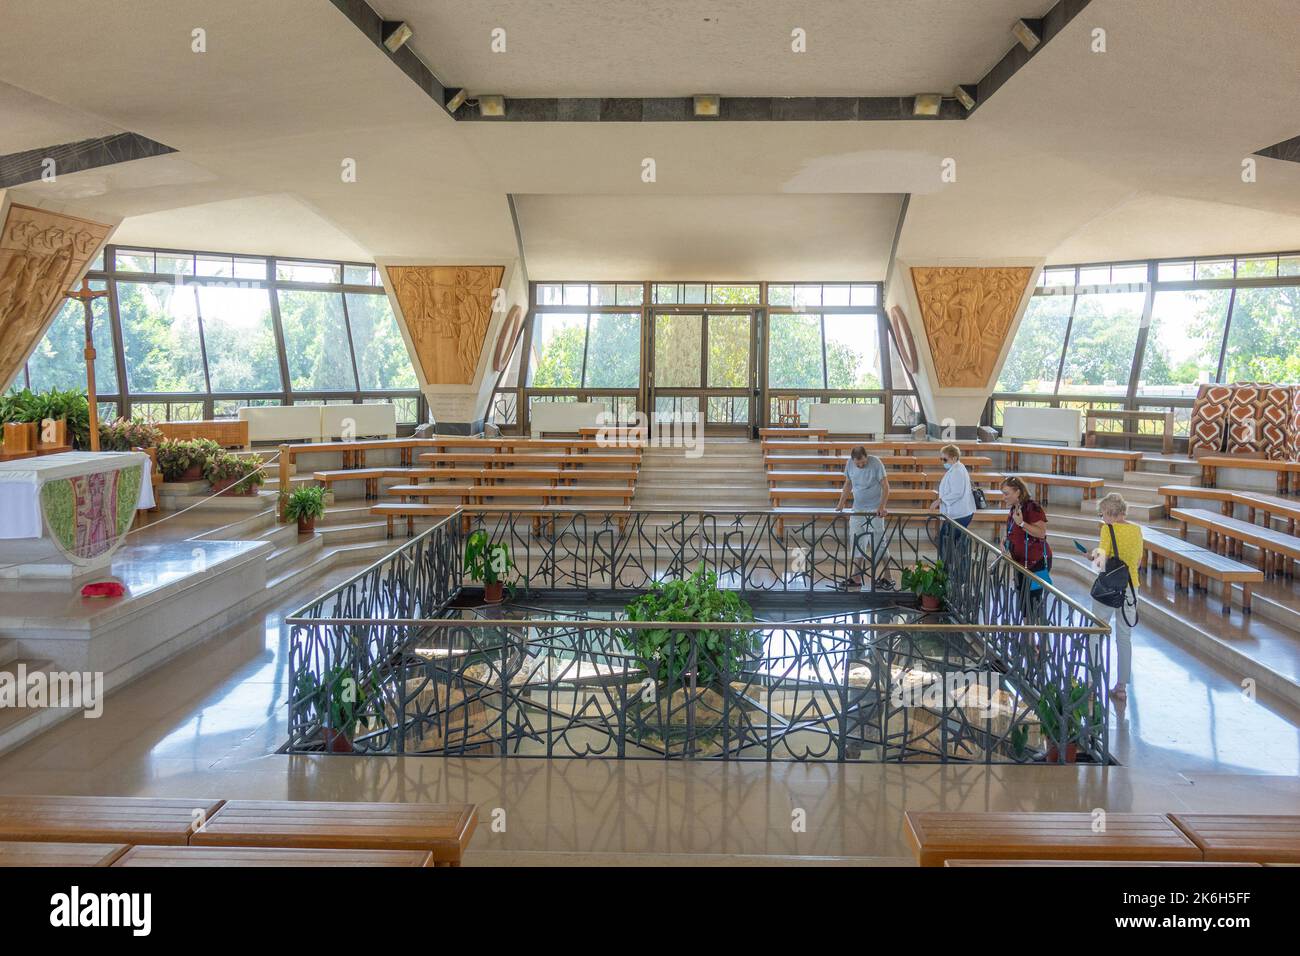 Israel, Galilea, Capernaum, iglesia conmemorativa de San Pedro, interior Foto de stock